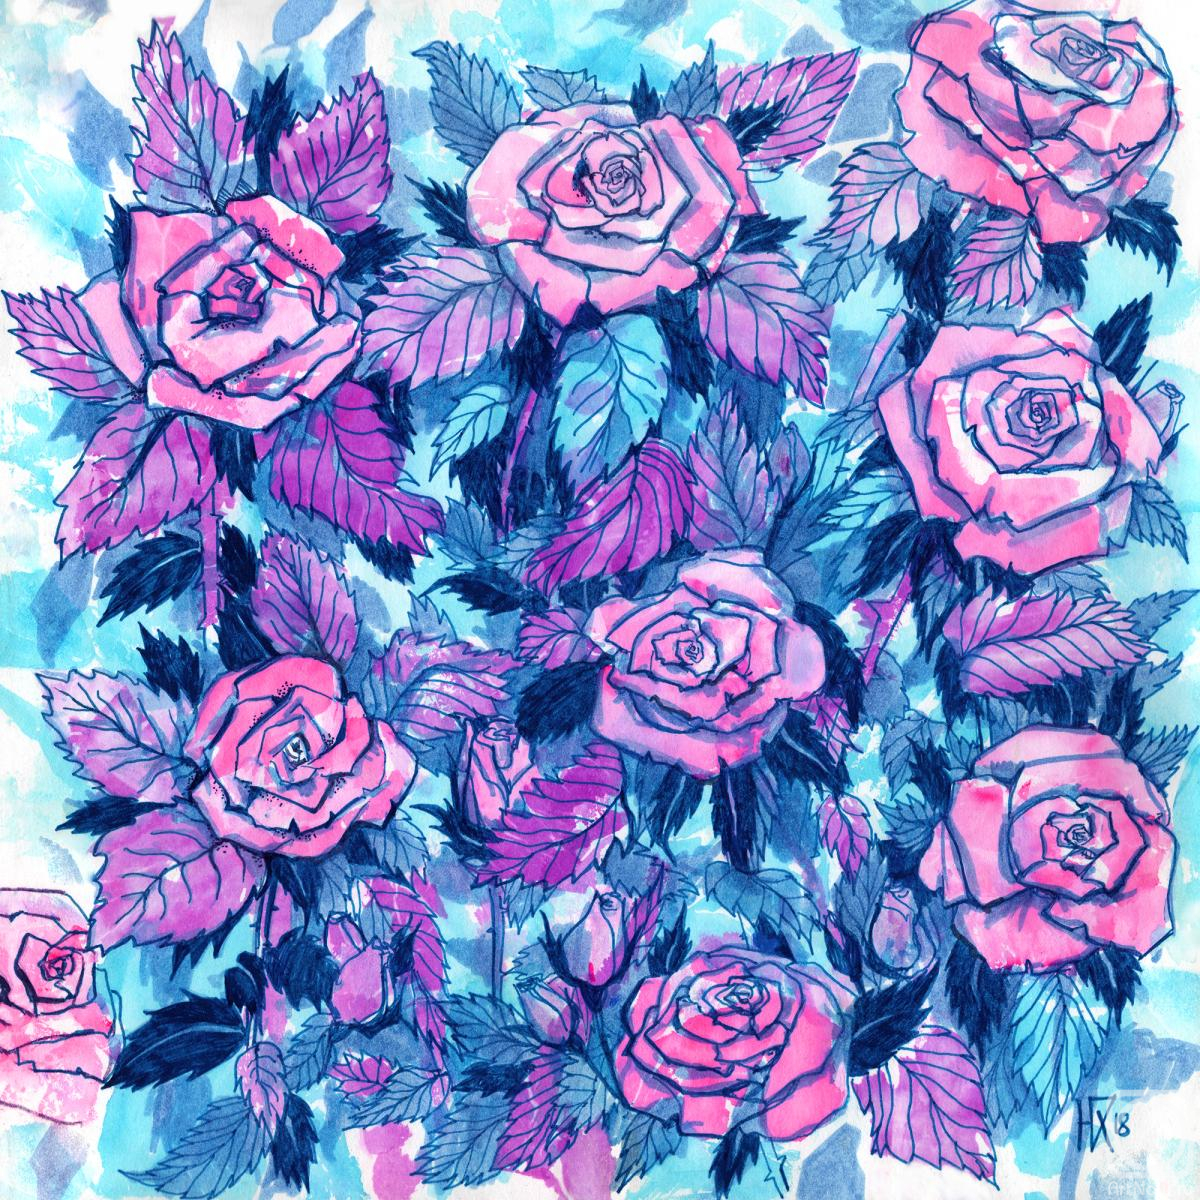 Horoshih Yuliya. Pink Roses Floral Painting Watercolor Sketch